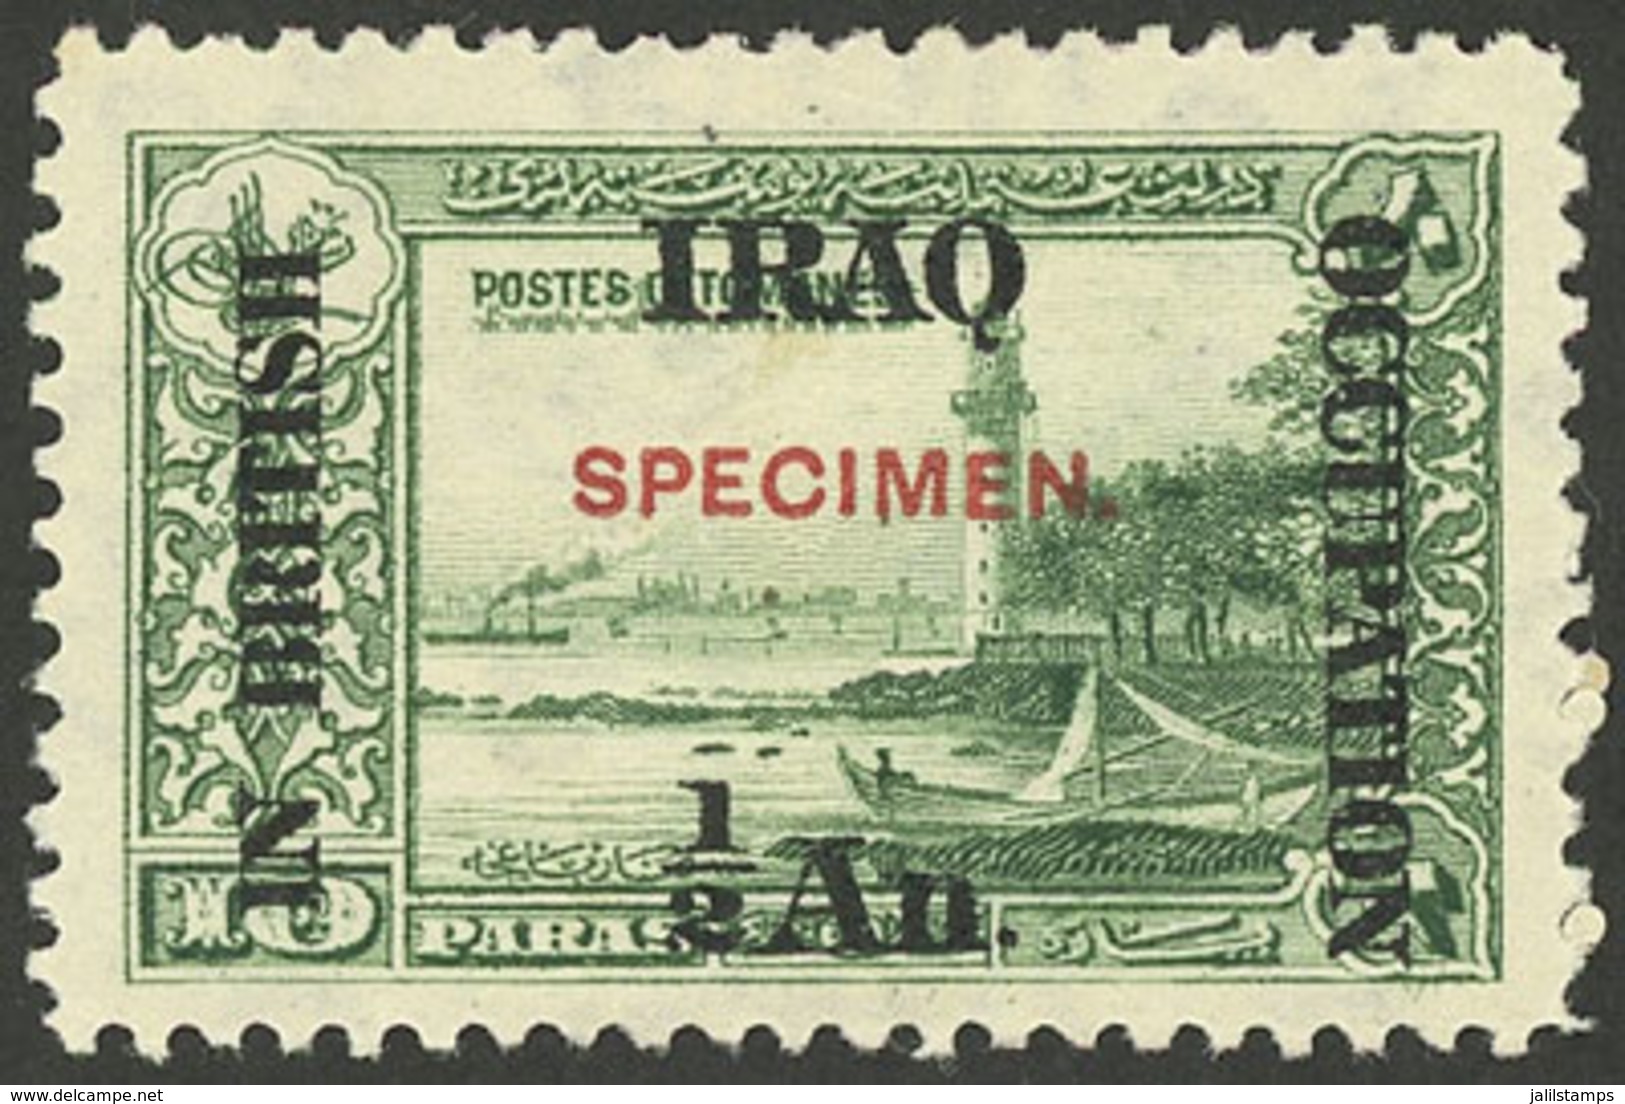 IRAQ: Sc.N29, With SPECIMEN Ovpt., Mint Original Gum, VF Quality! - Irak